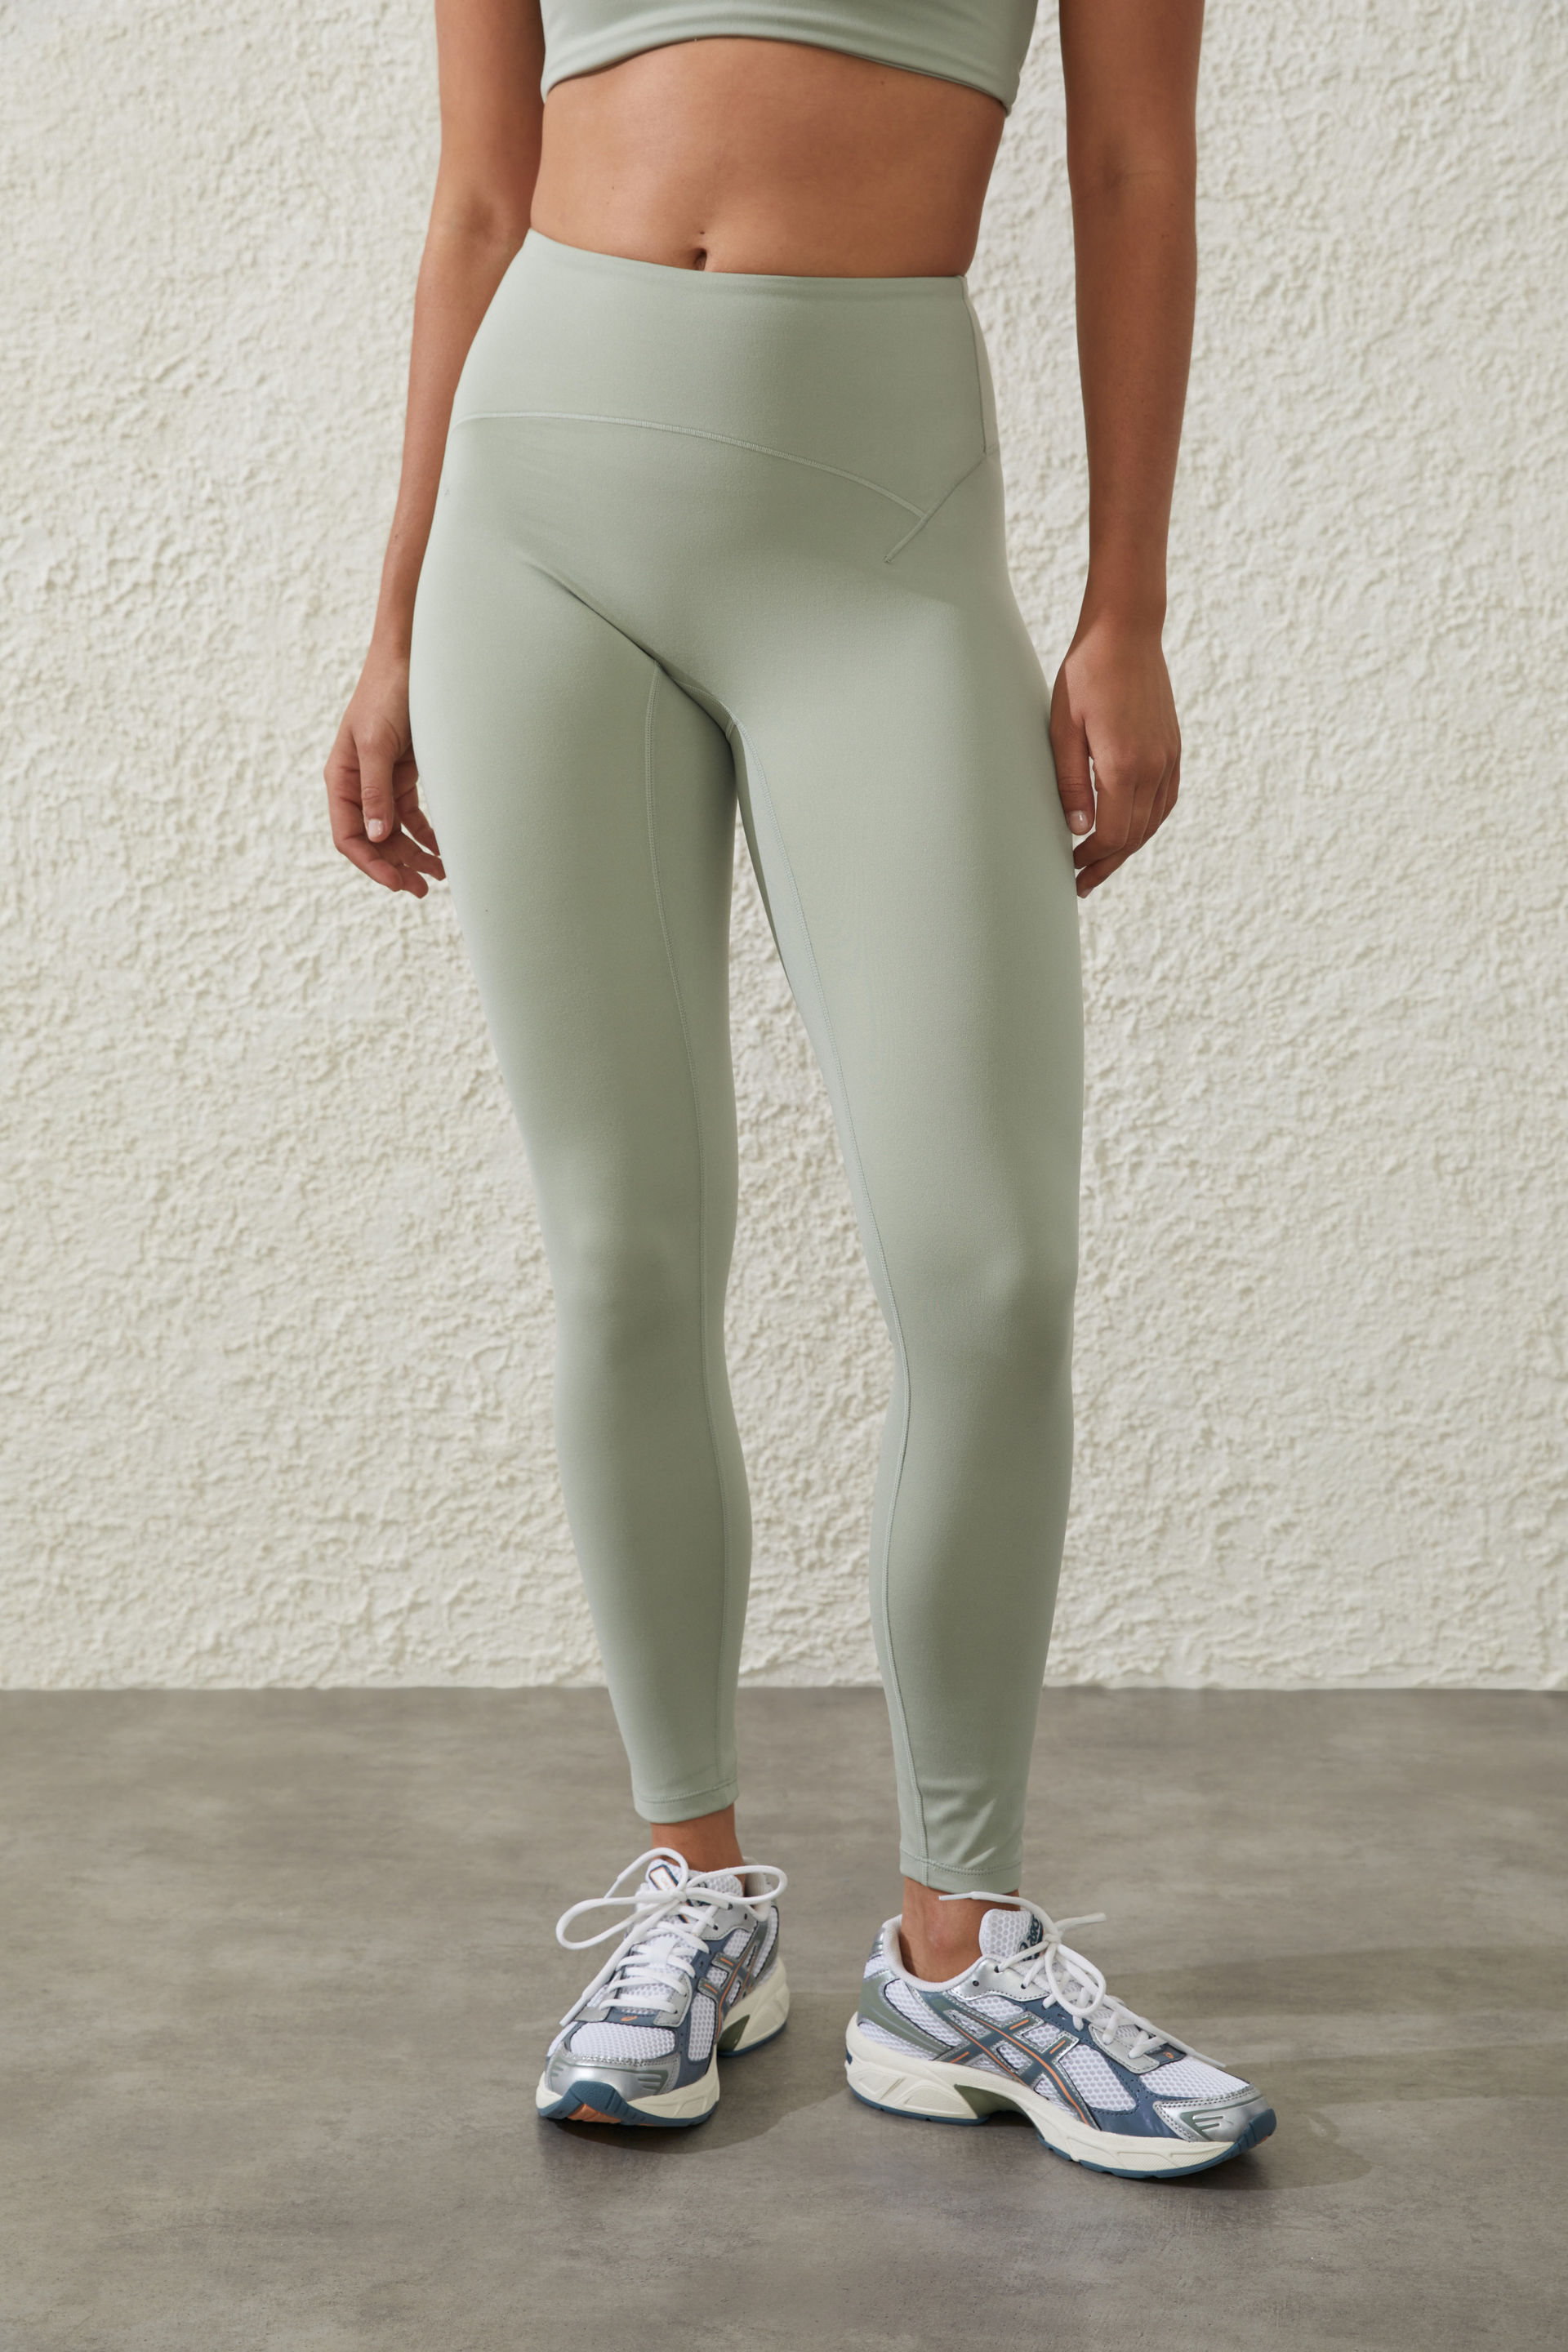 Soft Surroundings, Pants & Jumpsuits, Womens Tan Soft Surroundings Metro  Leggings Size S Rn 1206 Style 27431